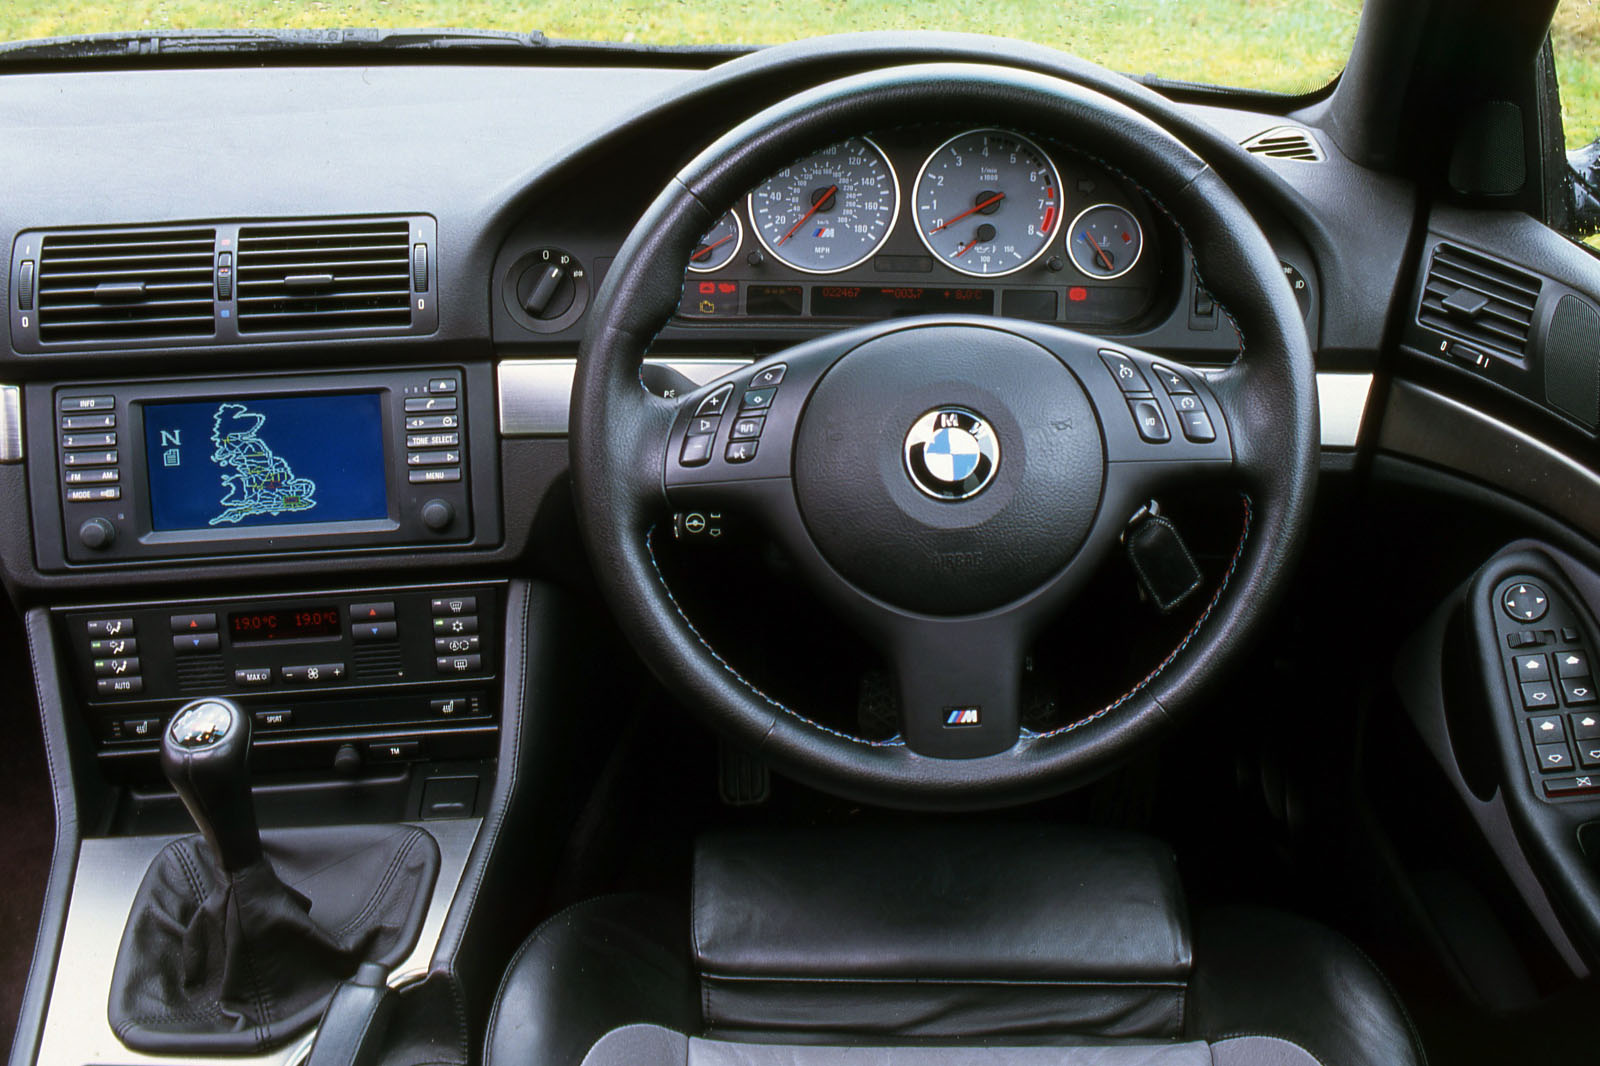 2000–2003 E39 BMW M5 Buyer's Guide